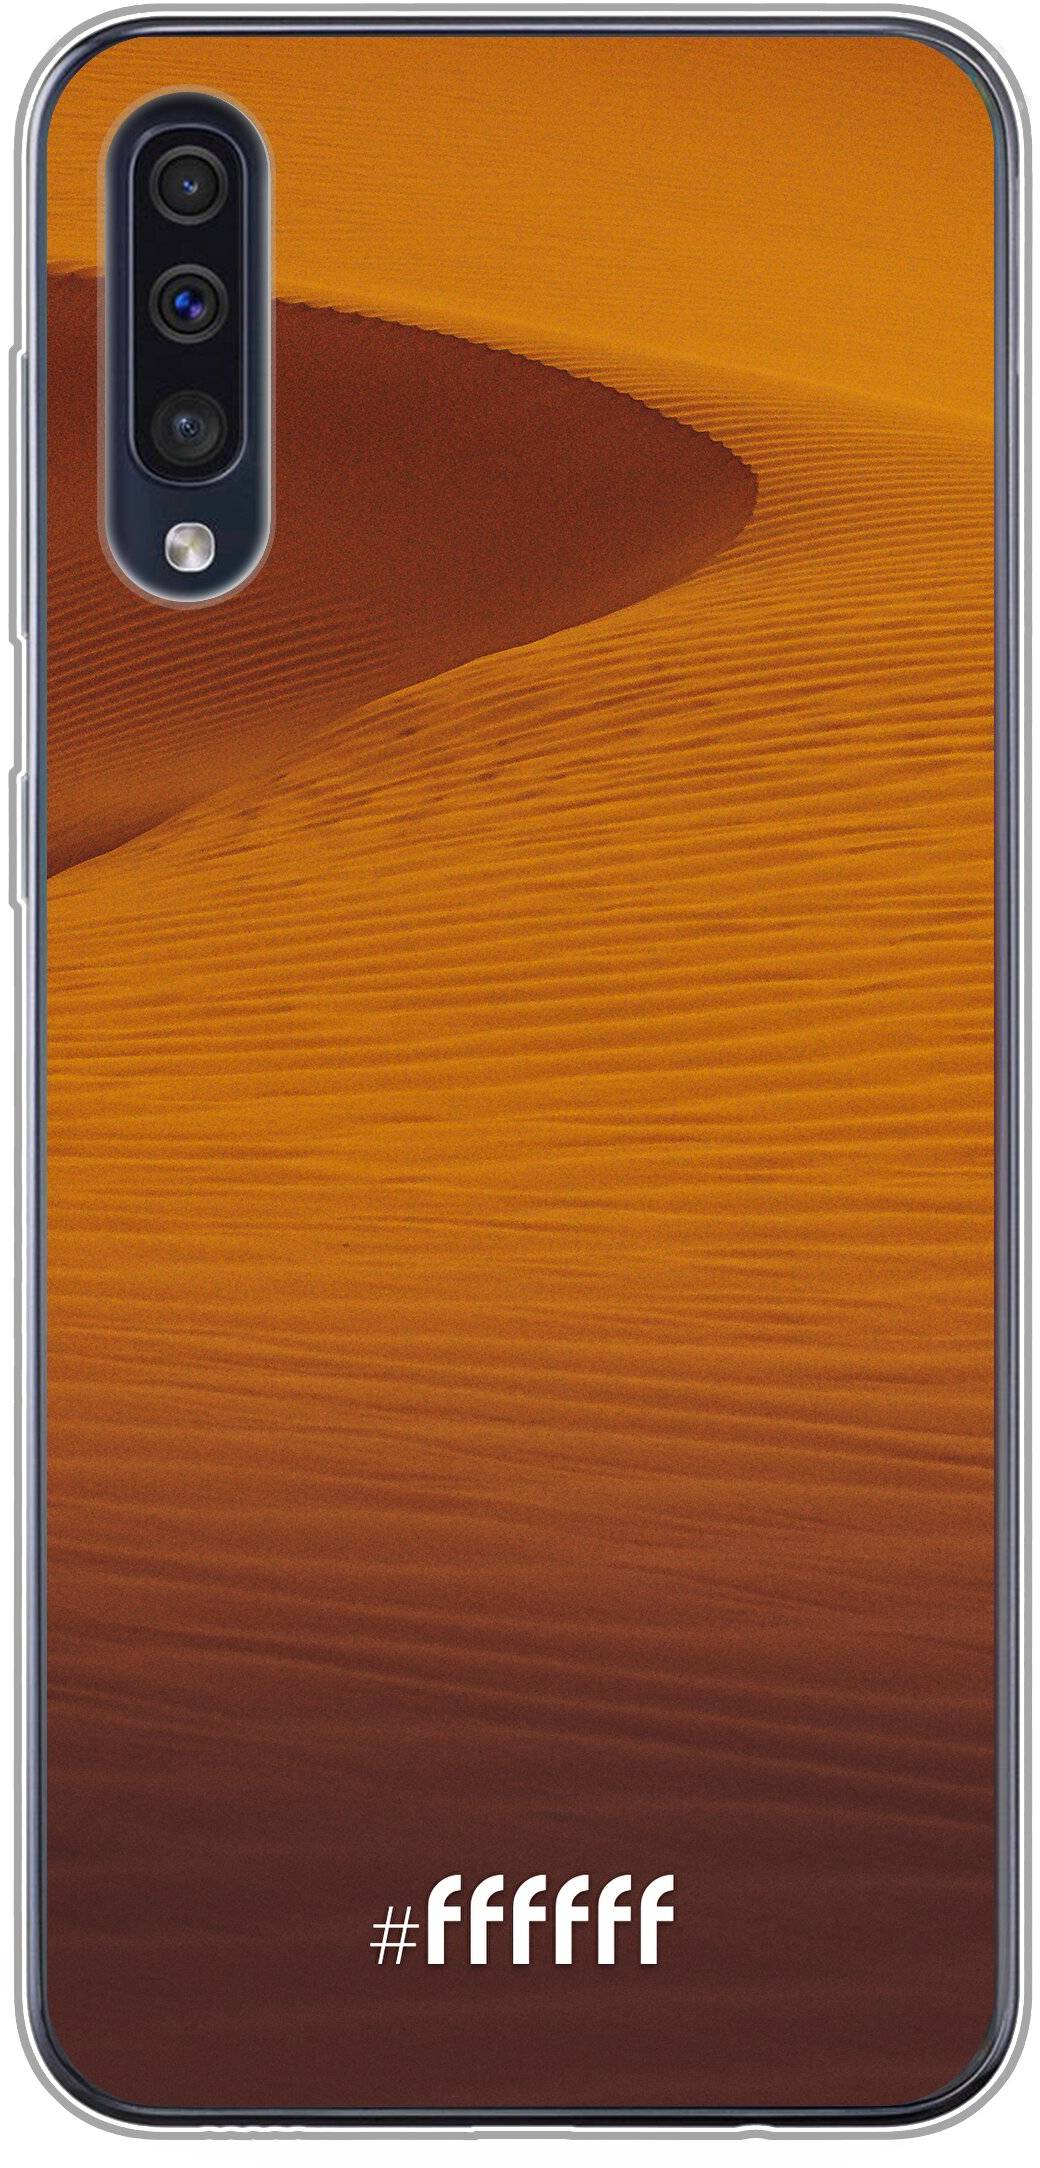 Sand Dunes Galaxy A50s